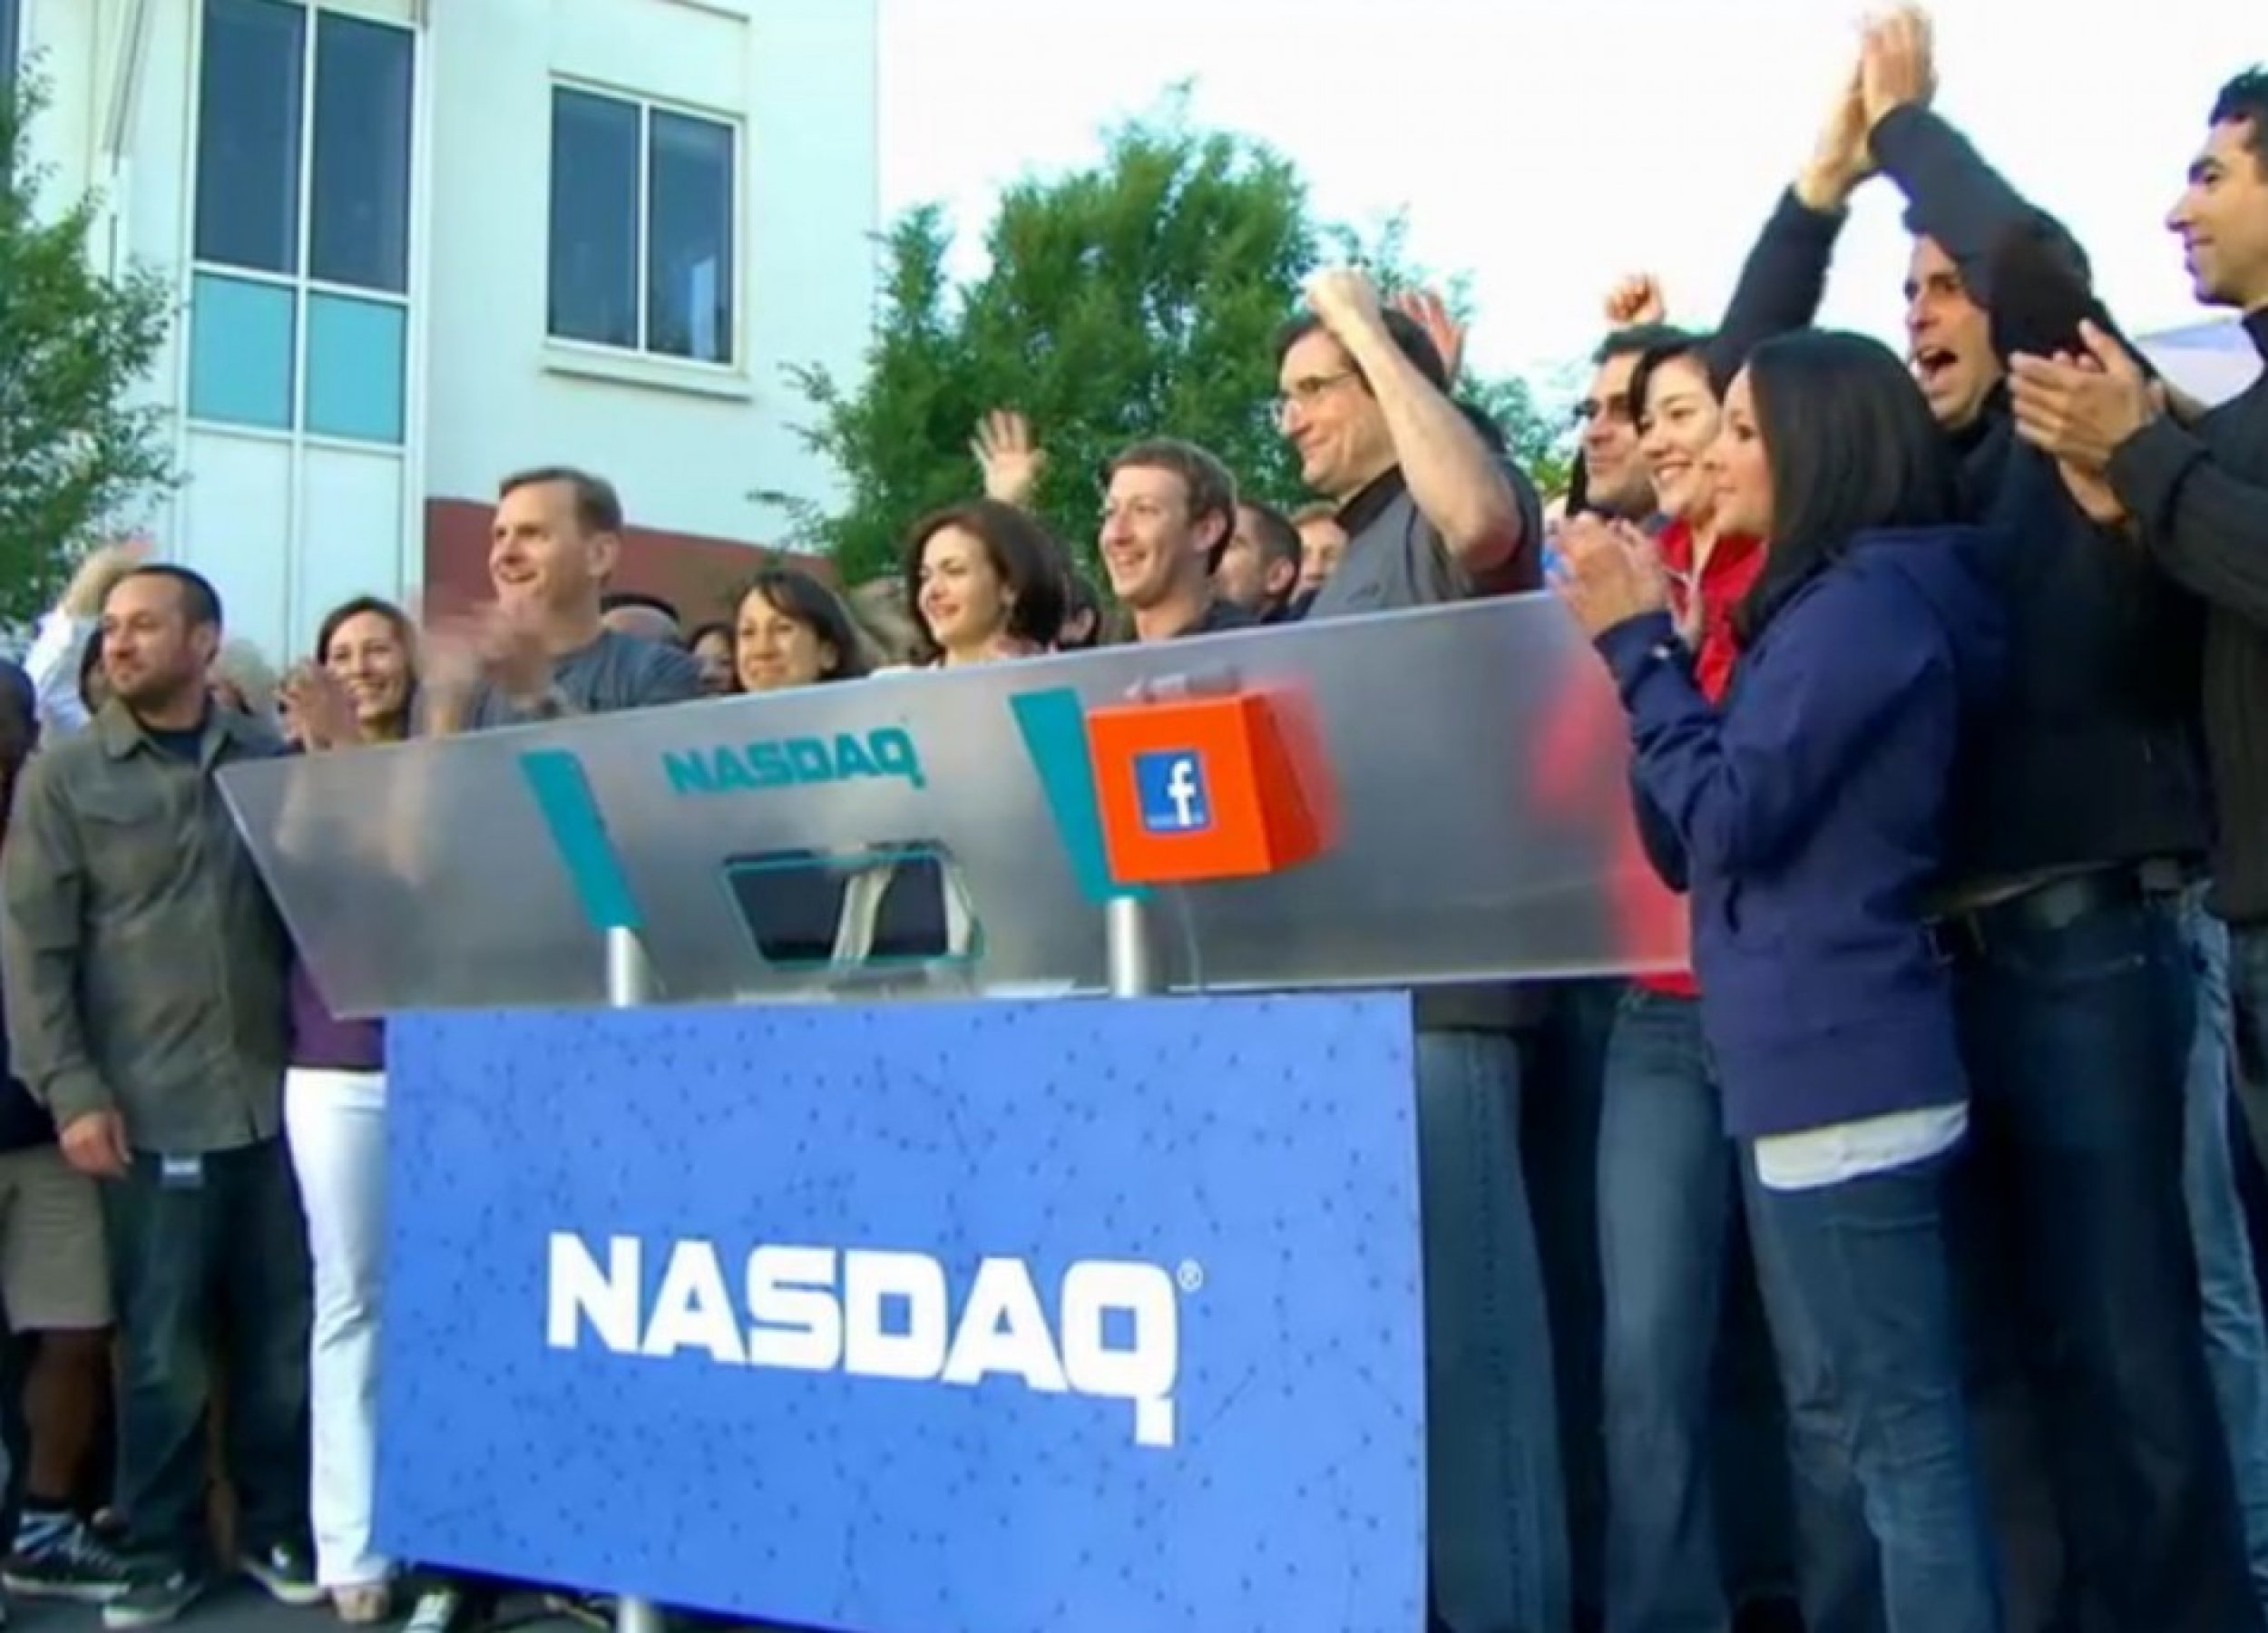 Facebook IPO Mark Zuckerberg Celebrates With Employees As Nasdaq Begins Trading